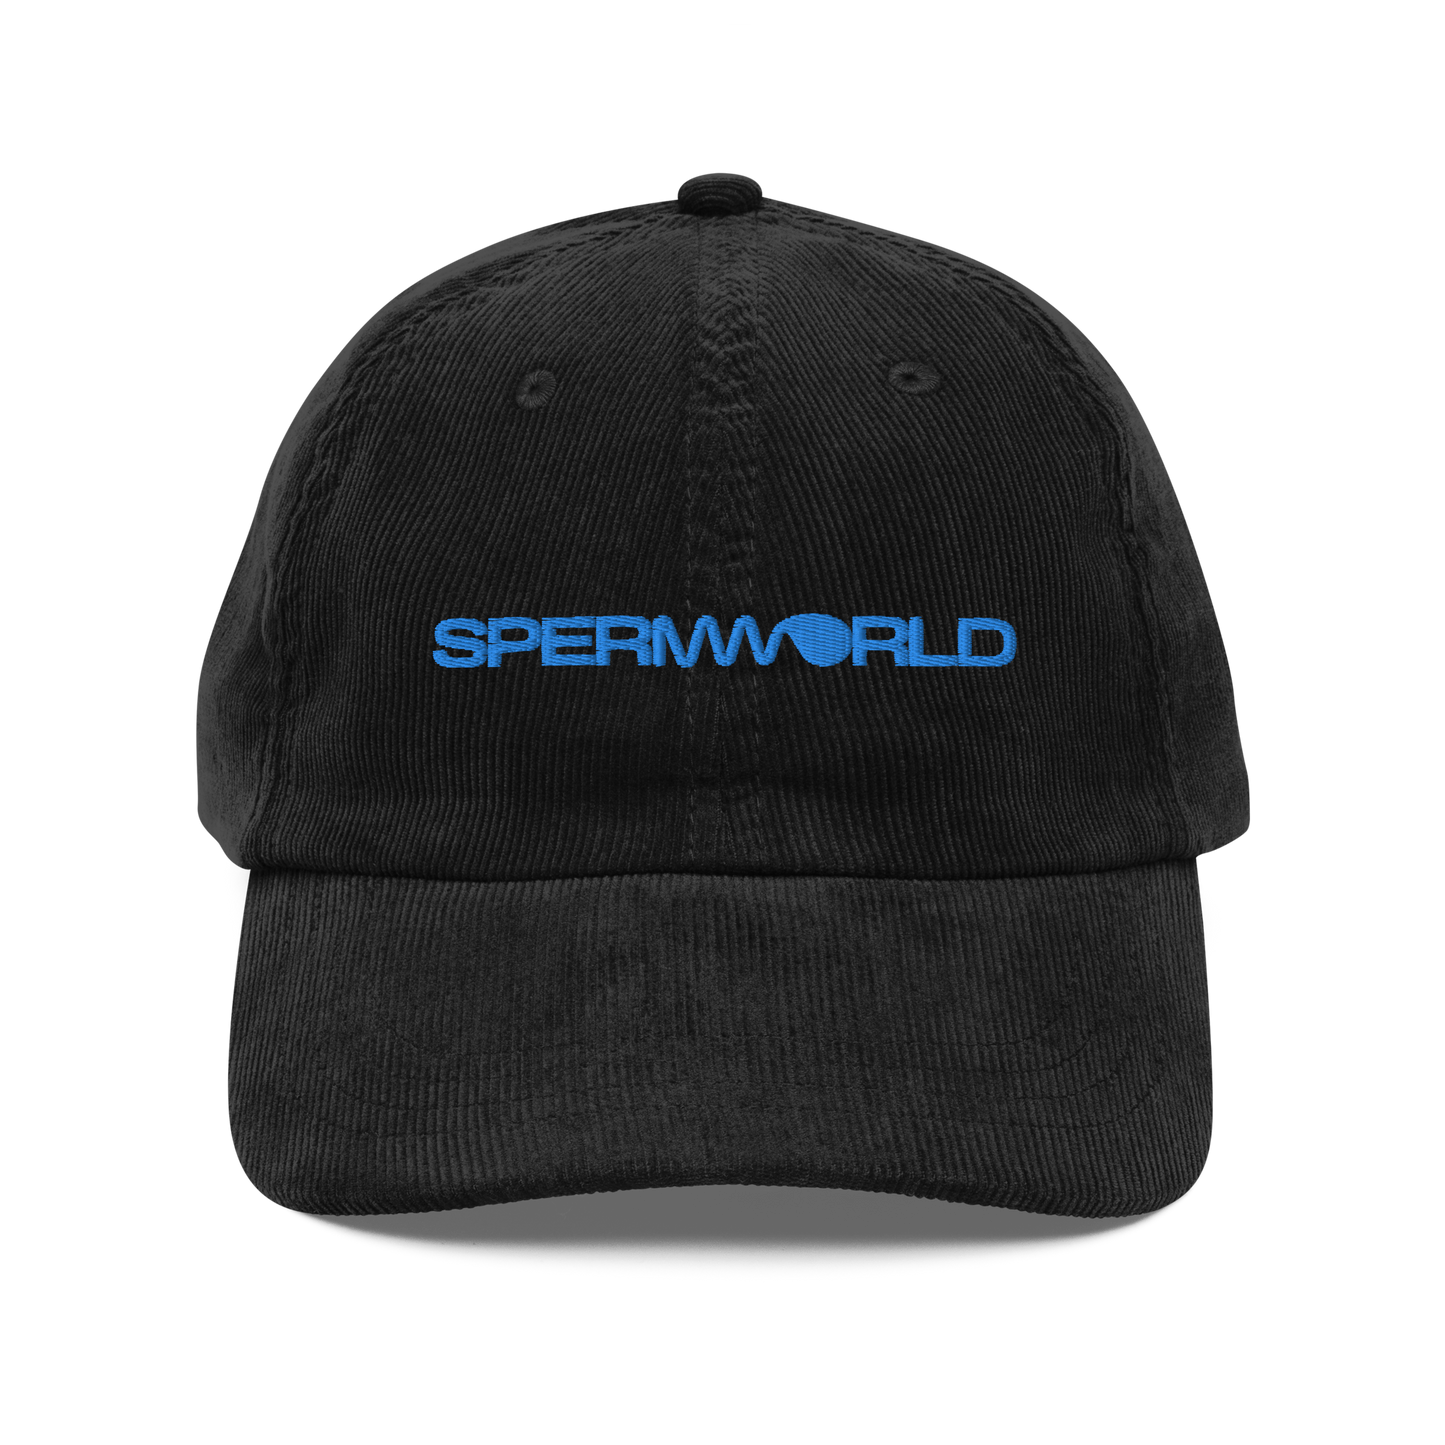 SPERMWORLD Official Film Hat